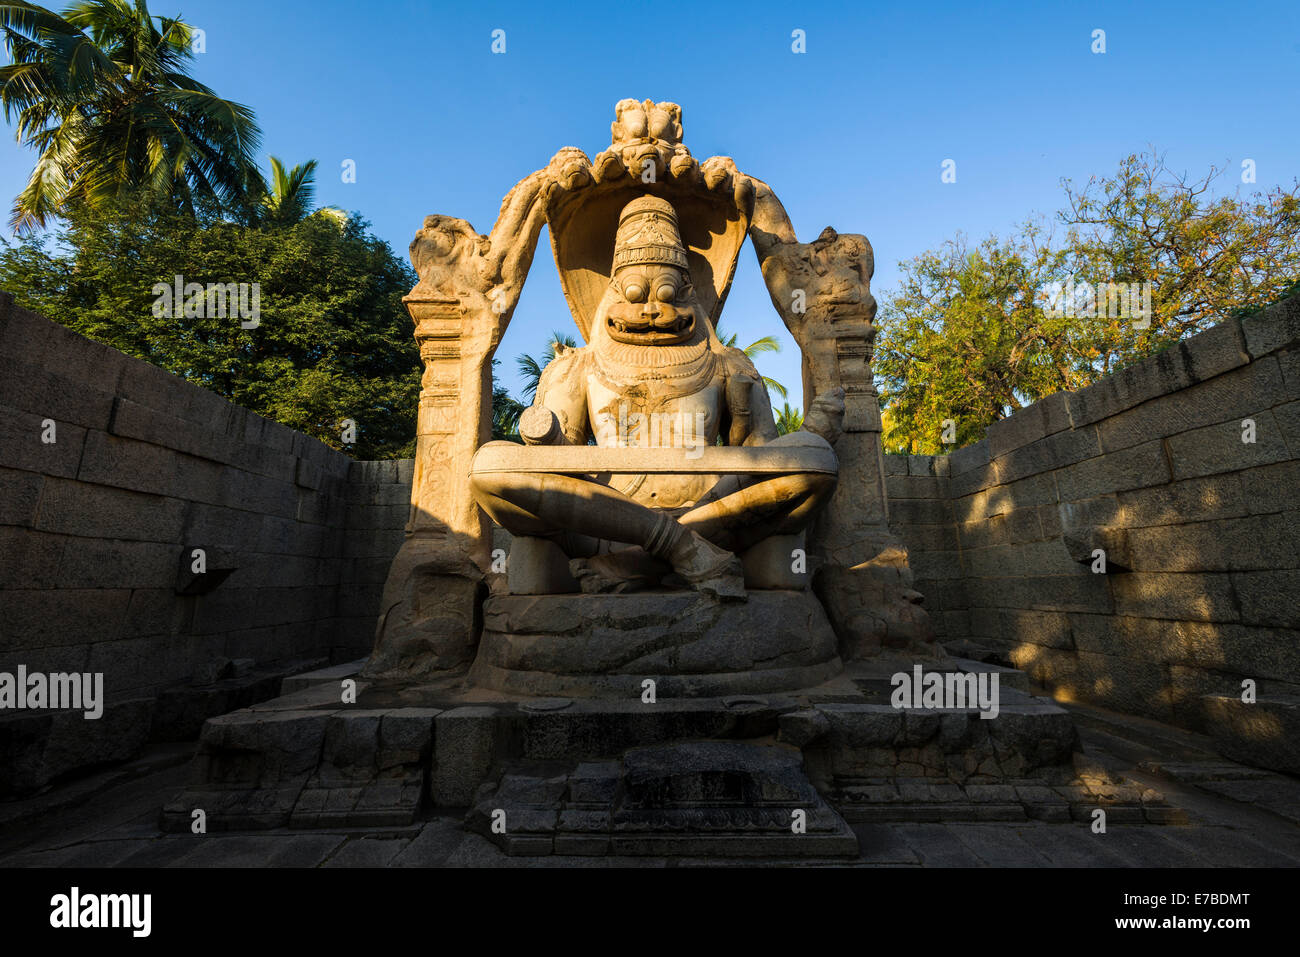 Narasimha statue, Temple Lakshmi Narasimha, ville en ruines de Vijayanagara, UNESCO World Heritage Site, Hampi, Karnataka, Inde Banque D'Images